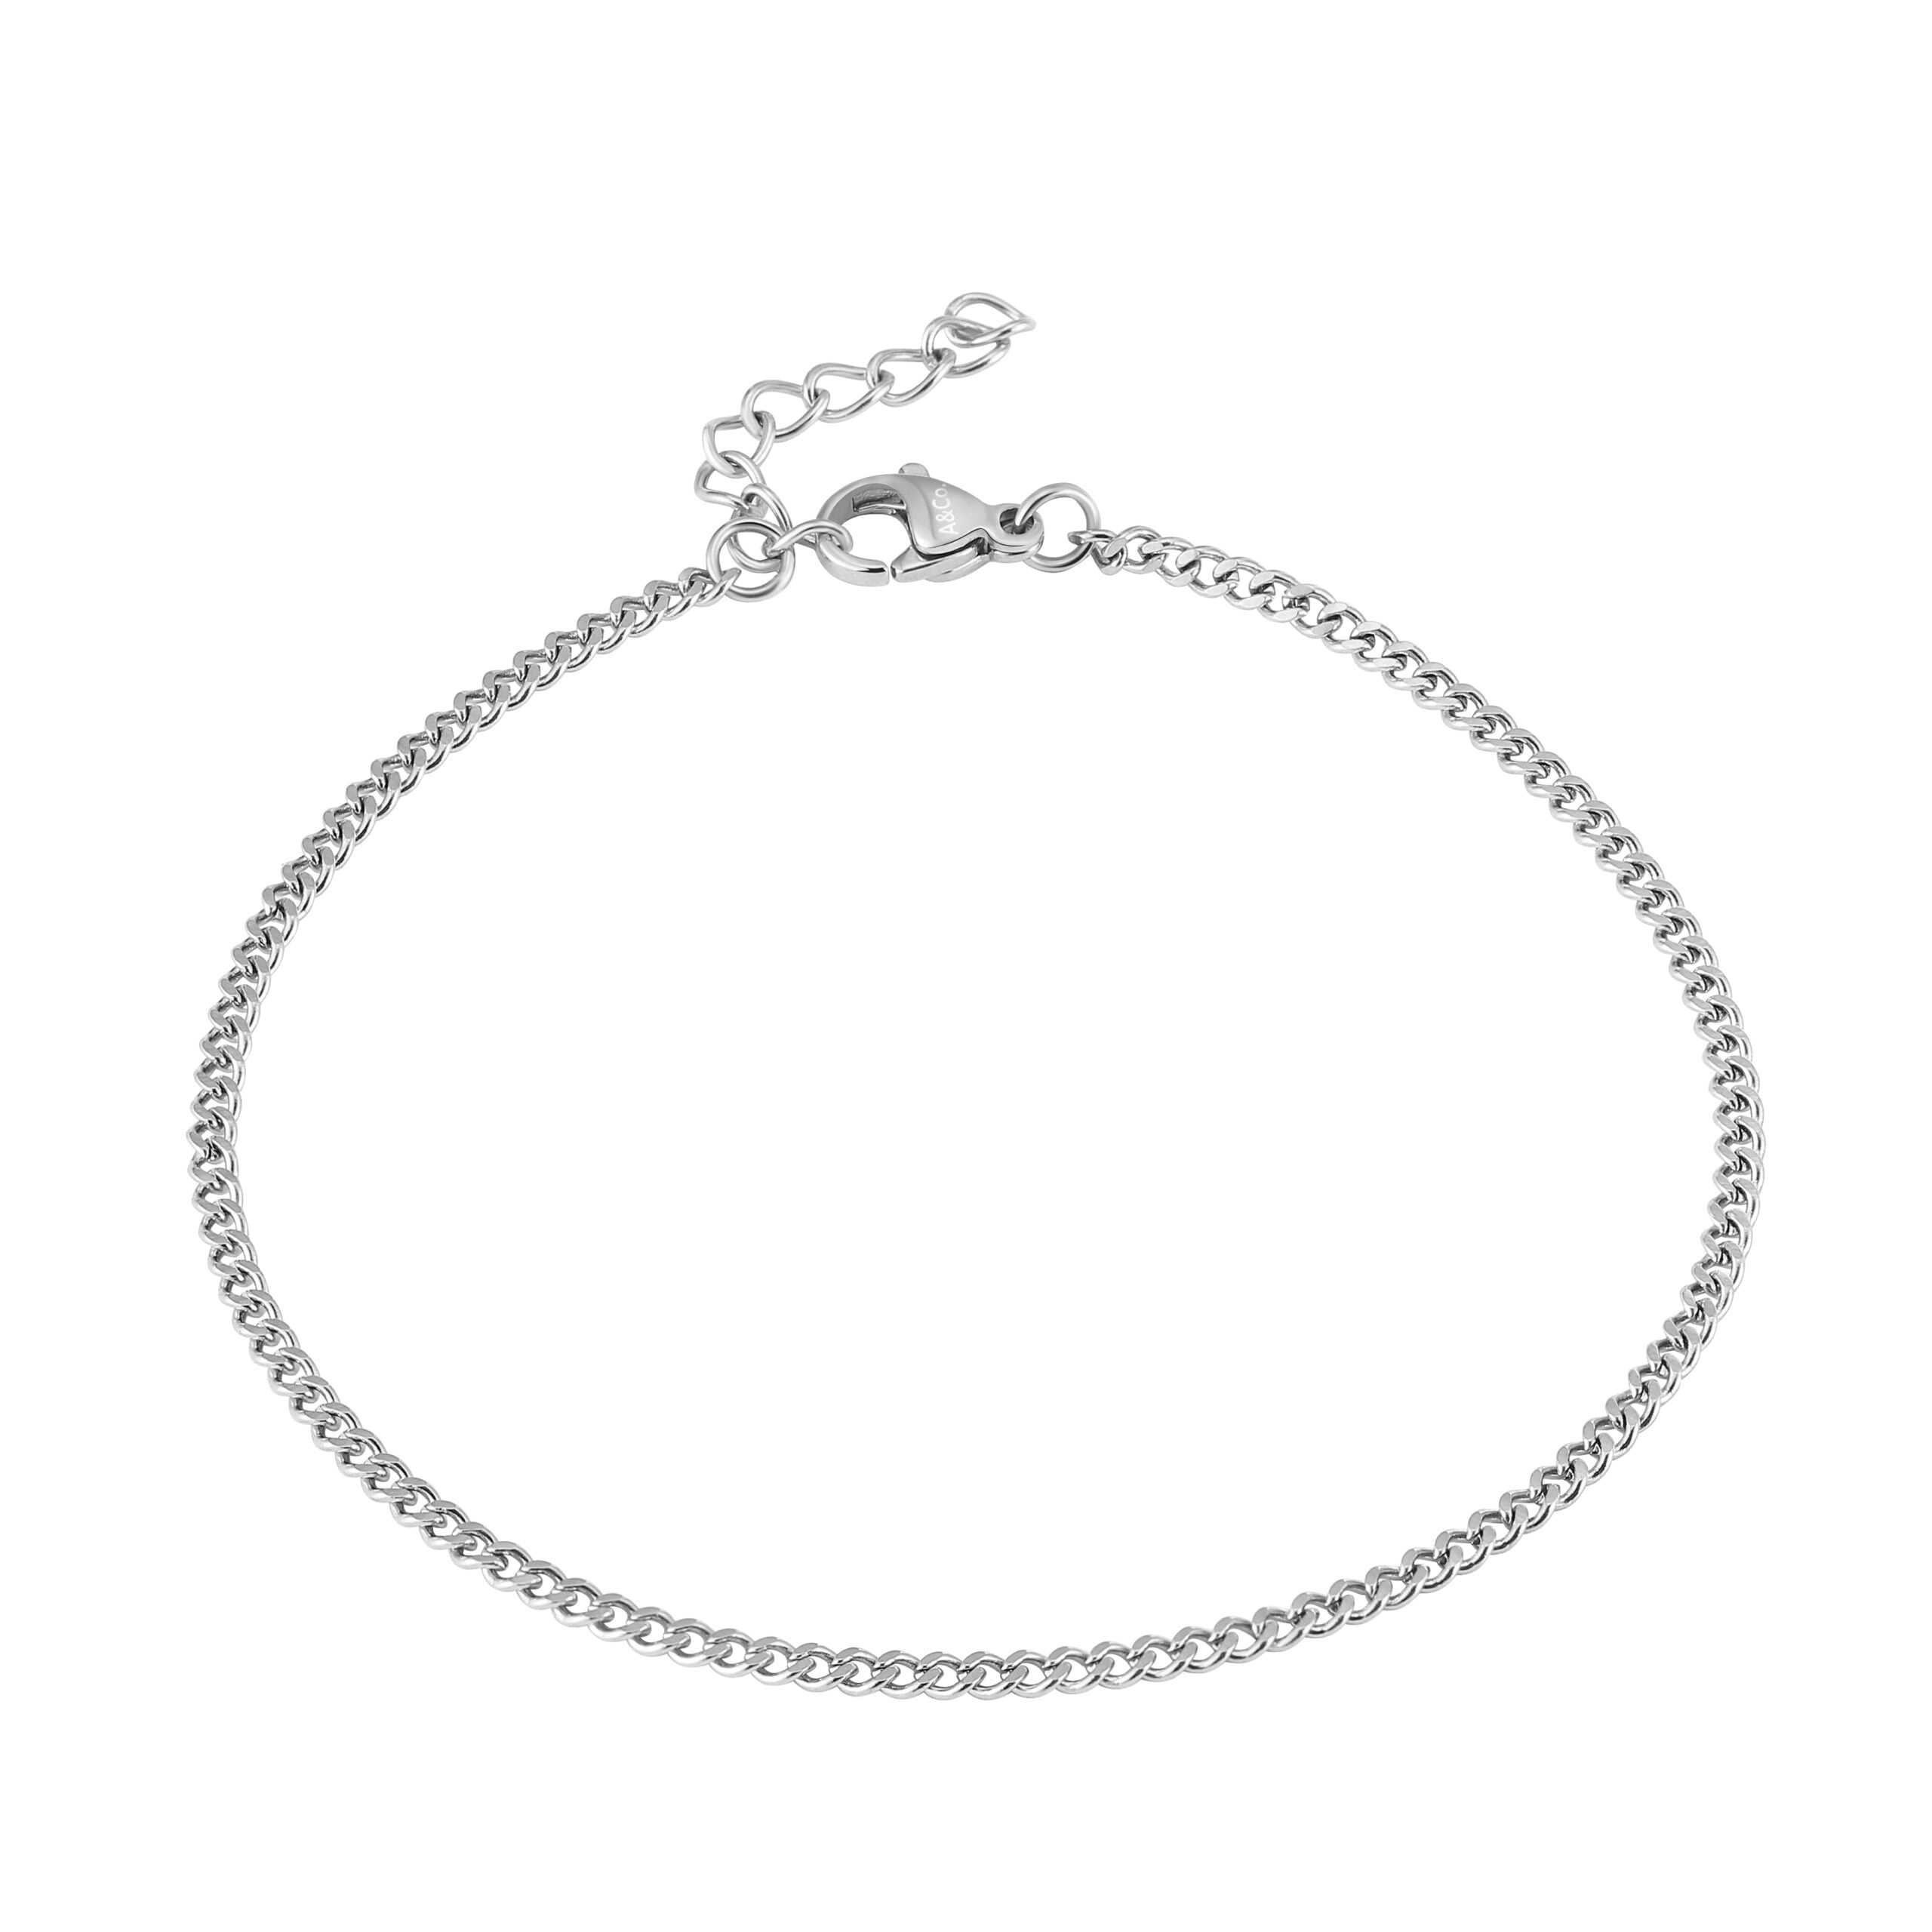 Gucci Interlocking G Pendant Necklace in Sterling Silver | FWRD